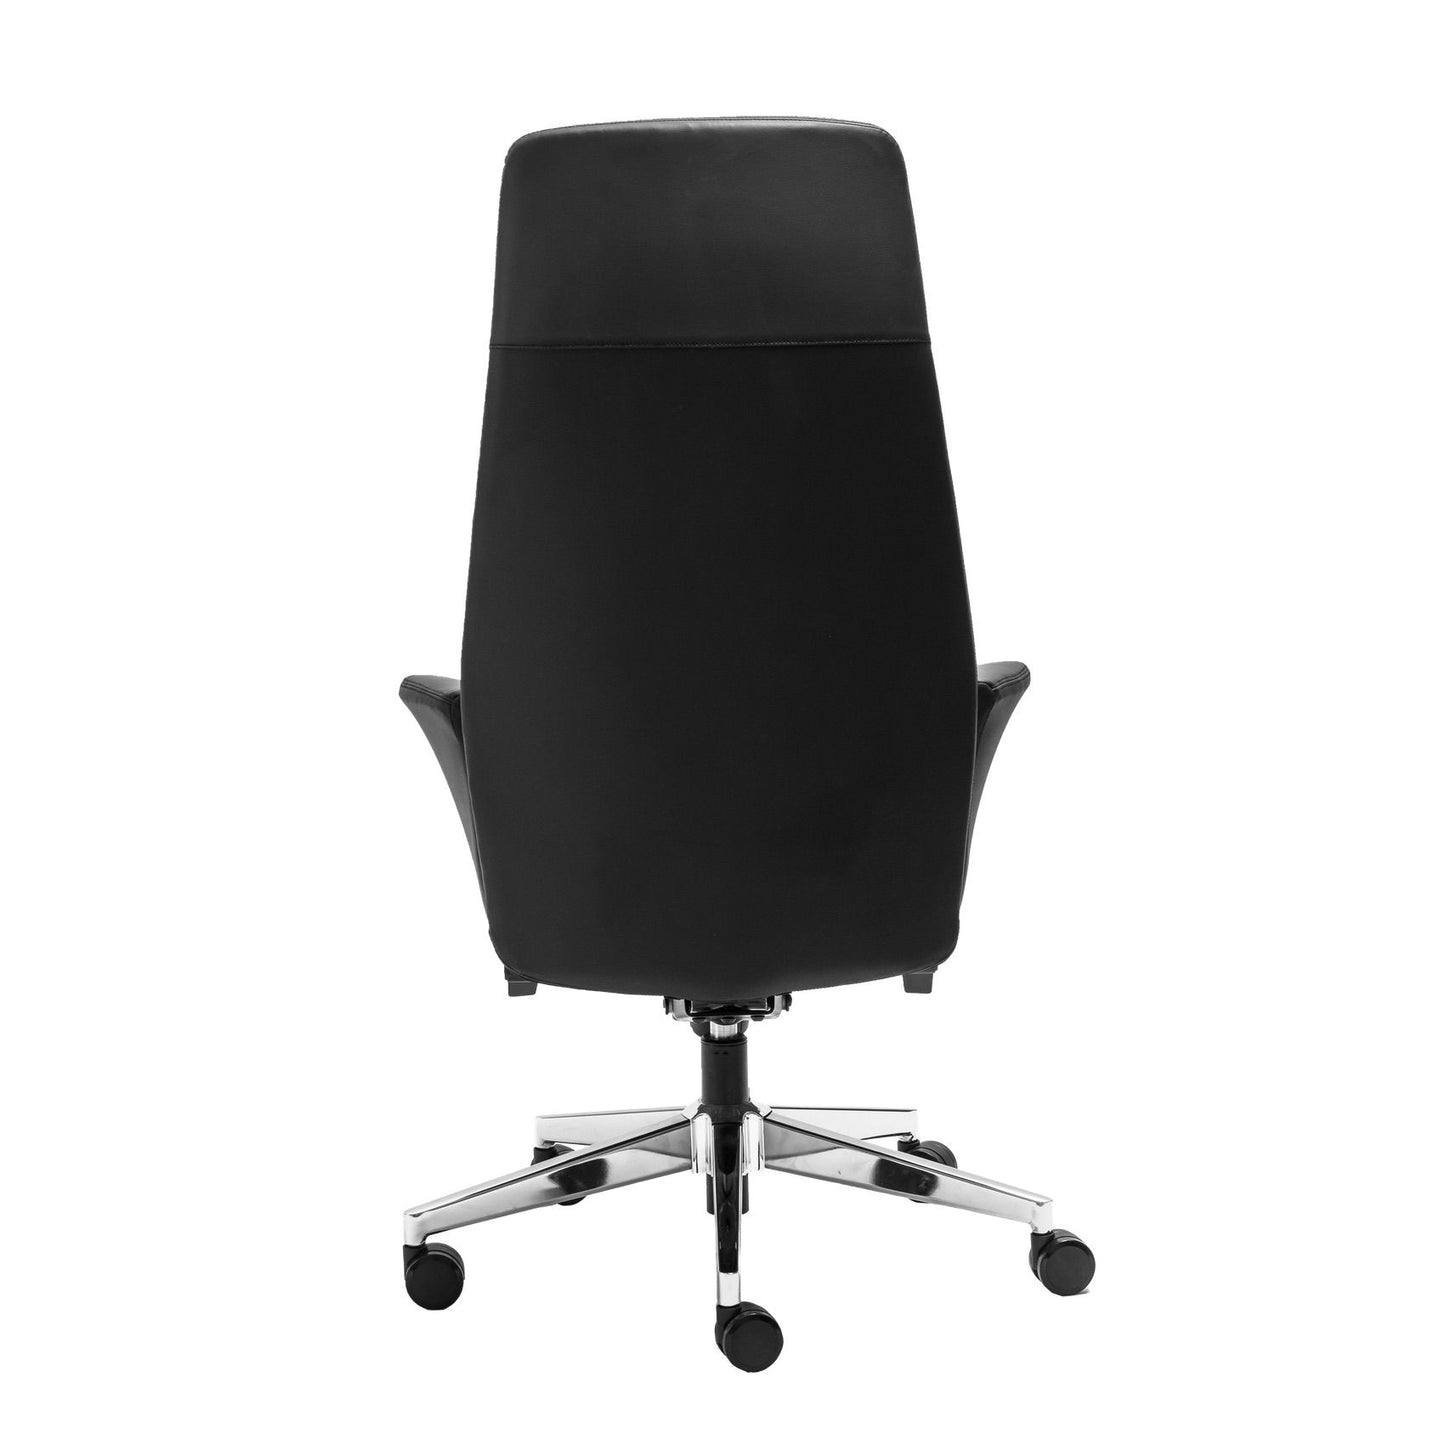 ErgoHome TB High Back Office Chair